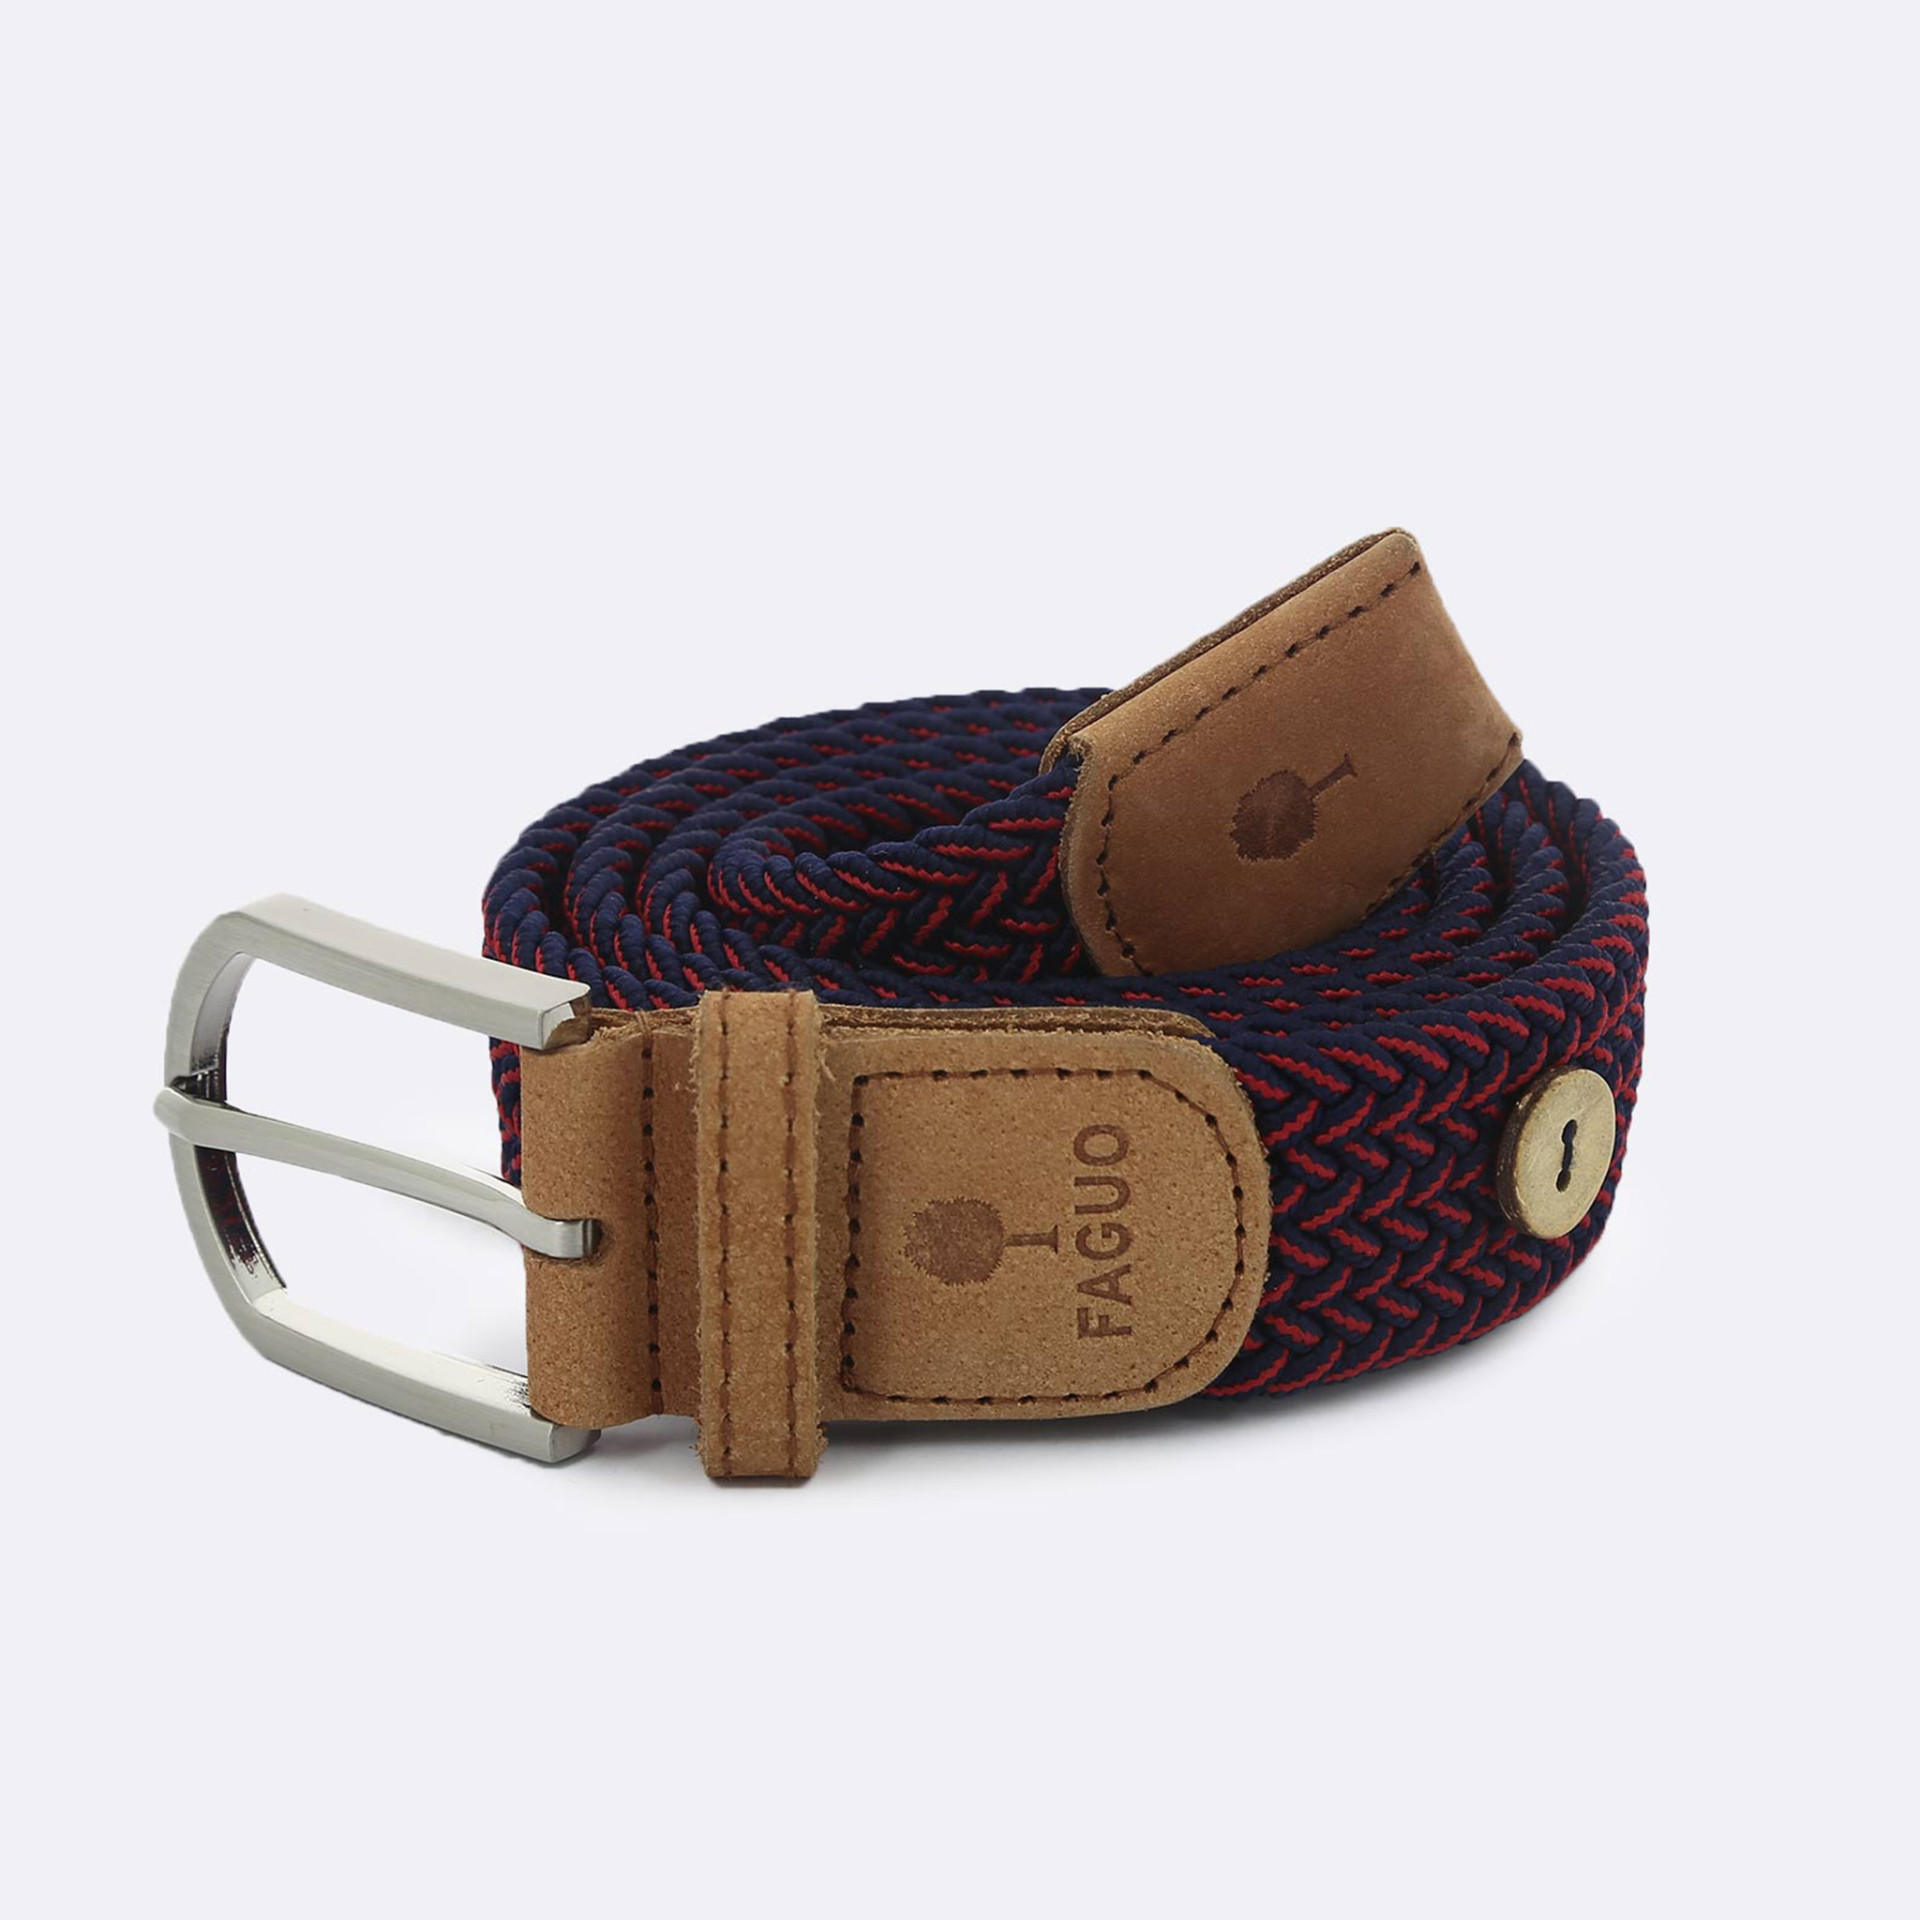 prod-26419-belt-ceinture-en-toile-rouge-1920x1920-s